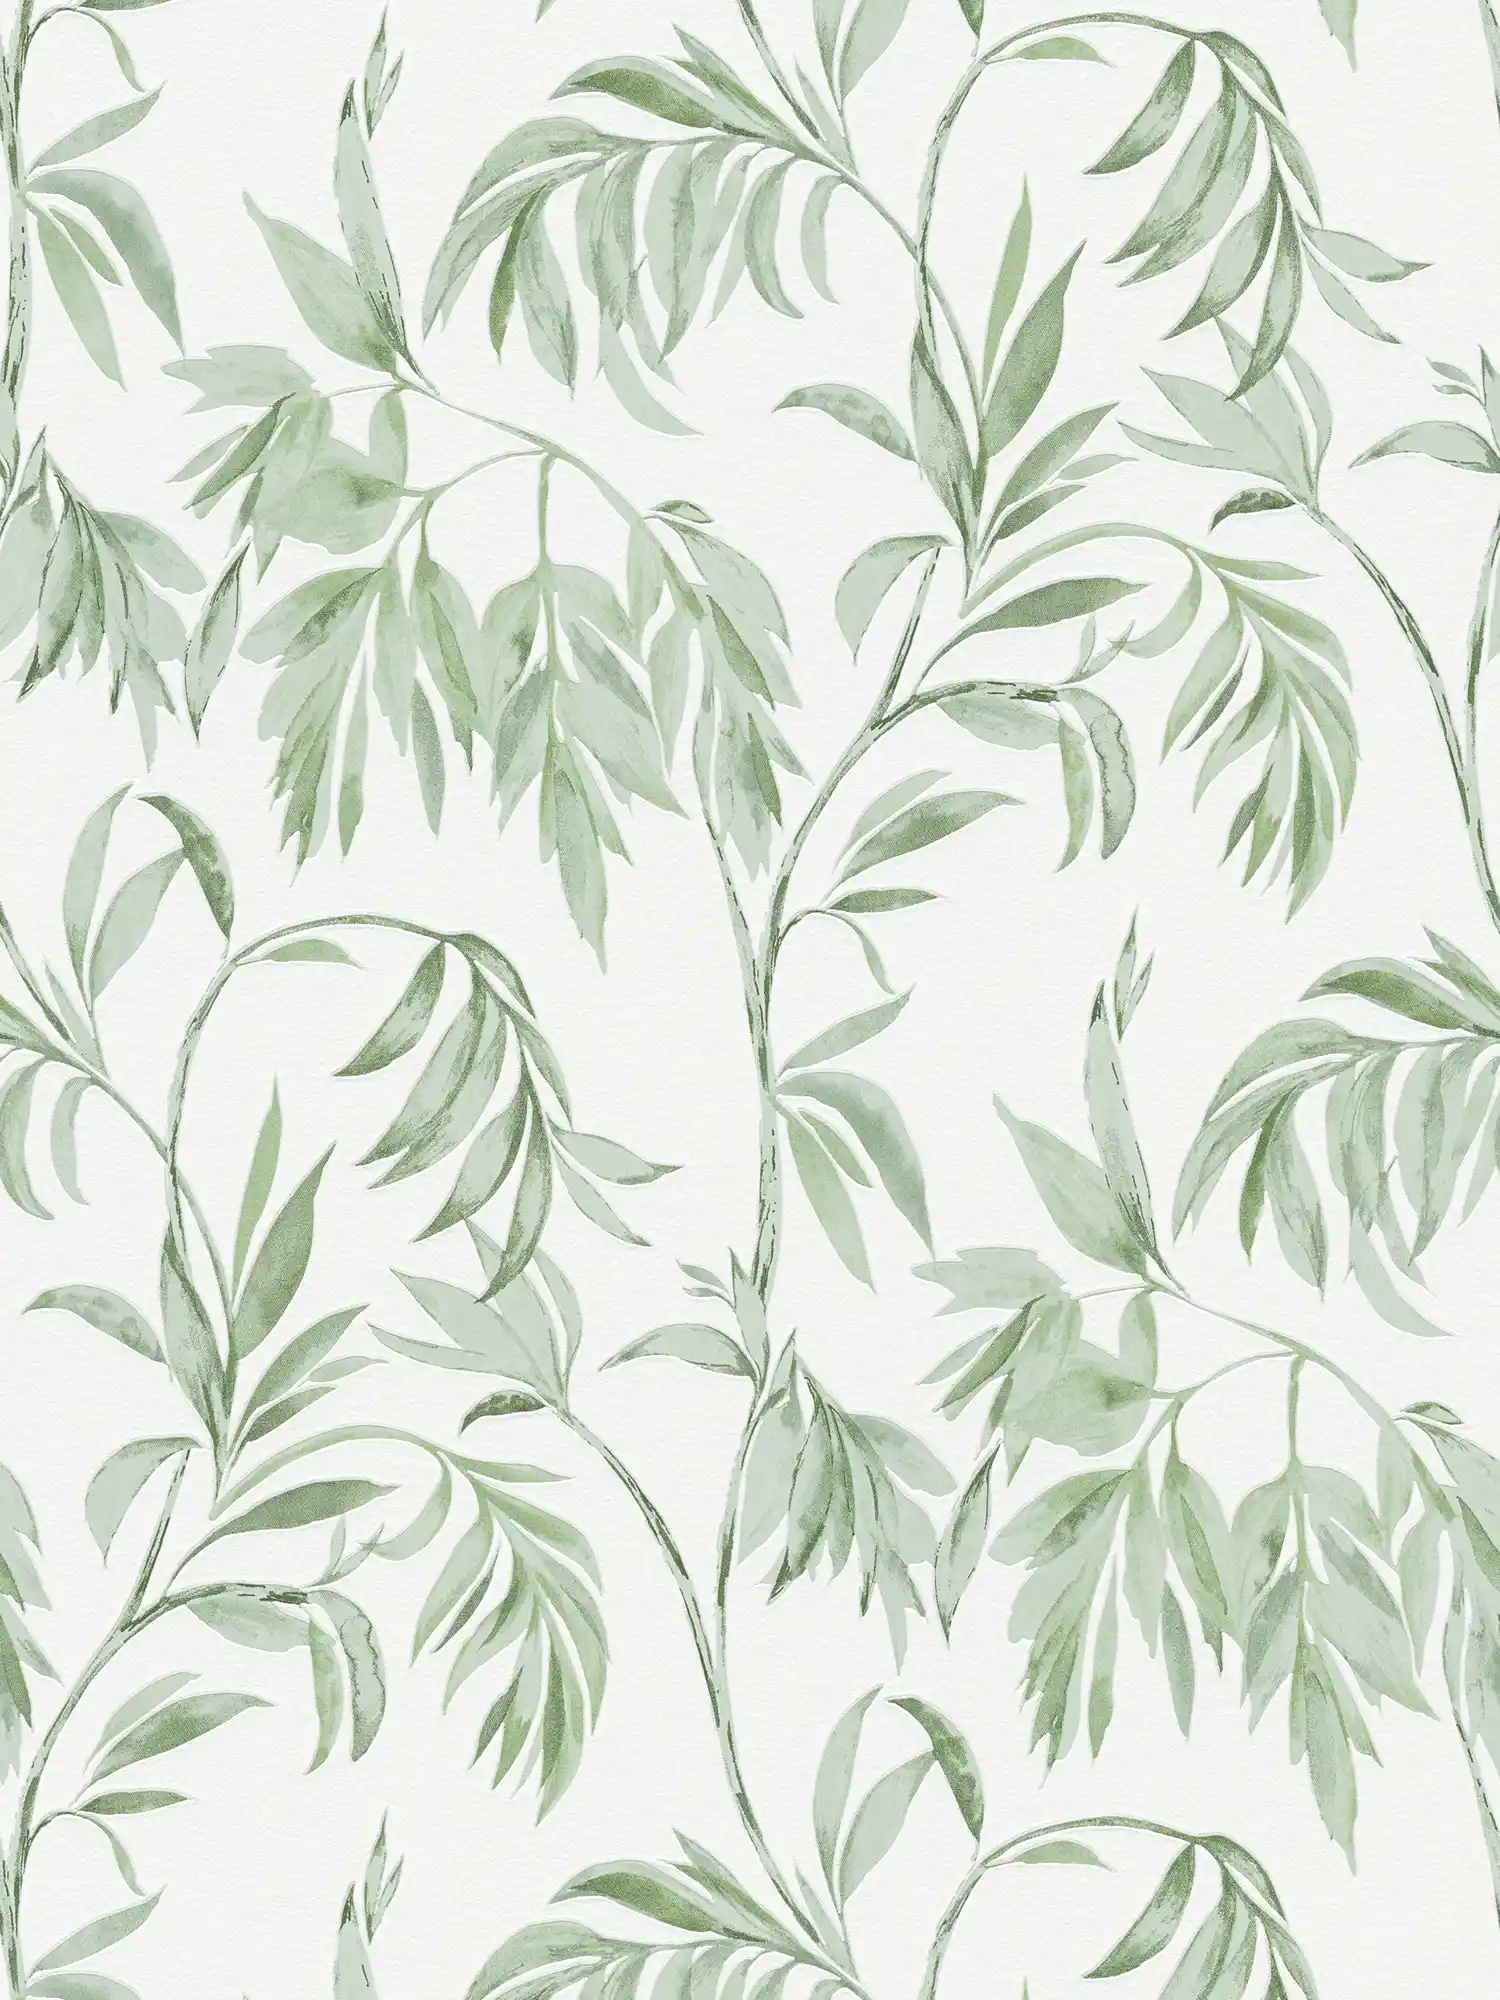 Watercolour style leafy vines wallpaper - green, white
